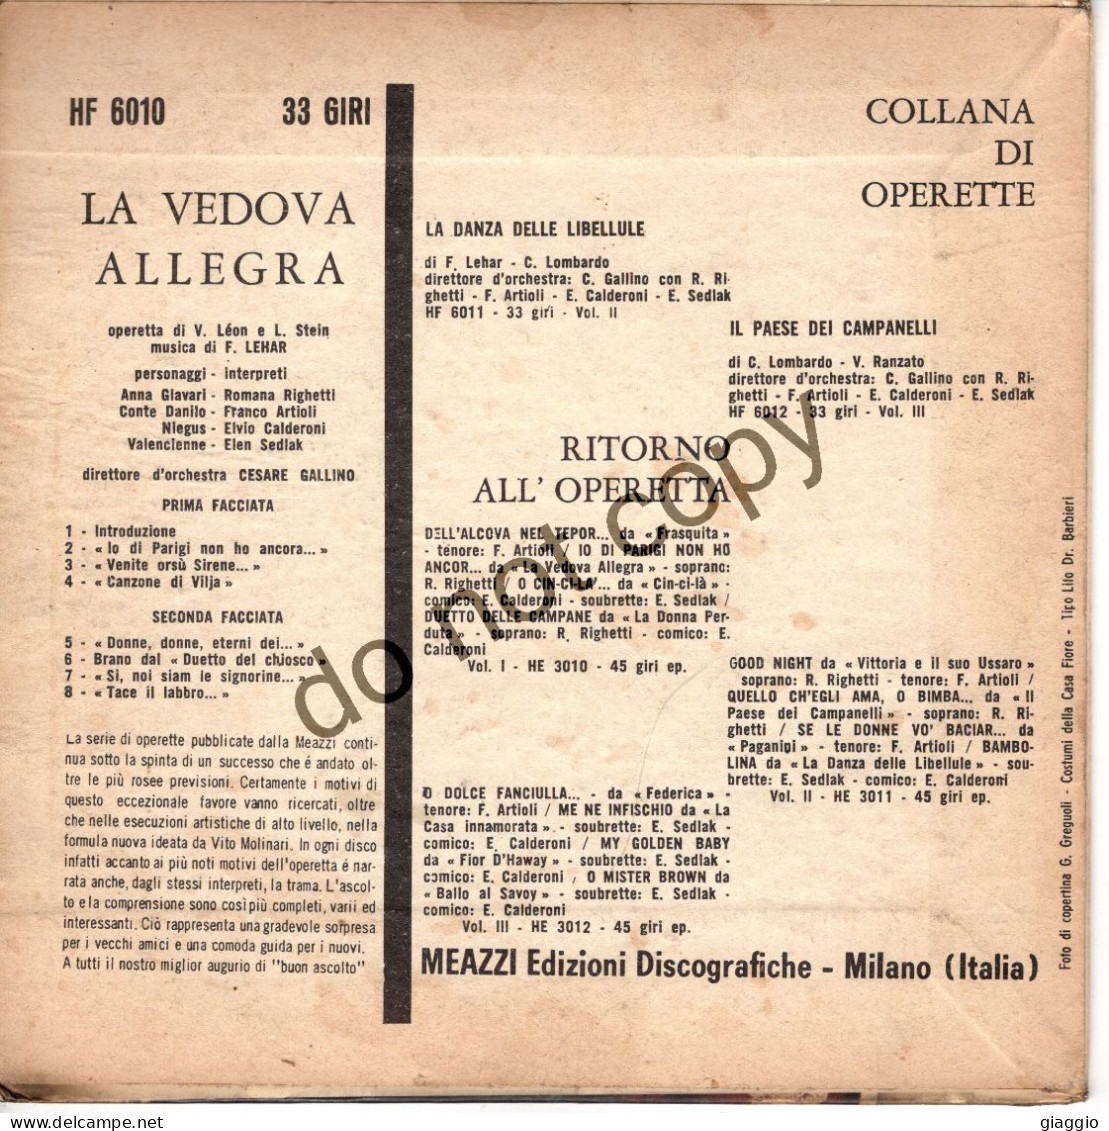 °°° 701) 45 GIRI - C. GALLINO - LA VEDOVA ALLEGRA - OPERETTE VOL.1 °°° - Sonstige - Italienische Musik